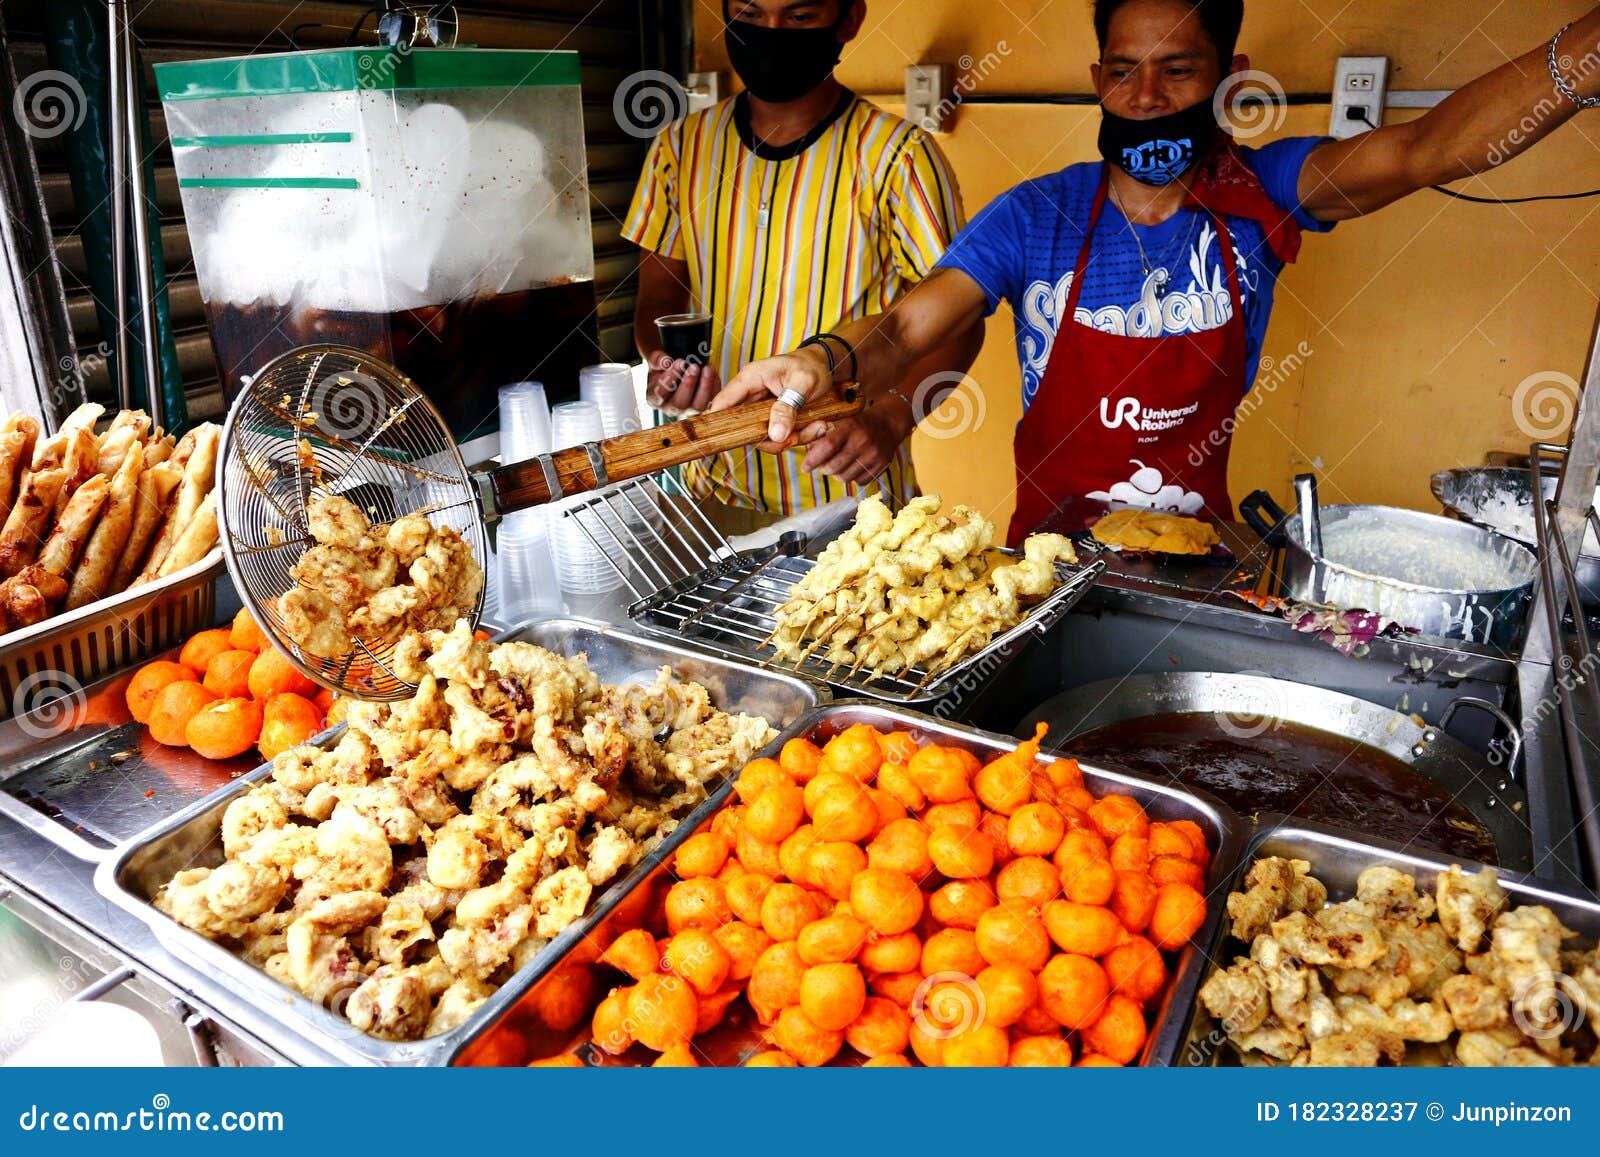 street food vendors essay